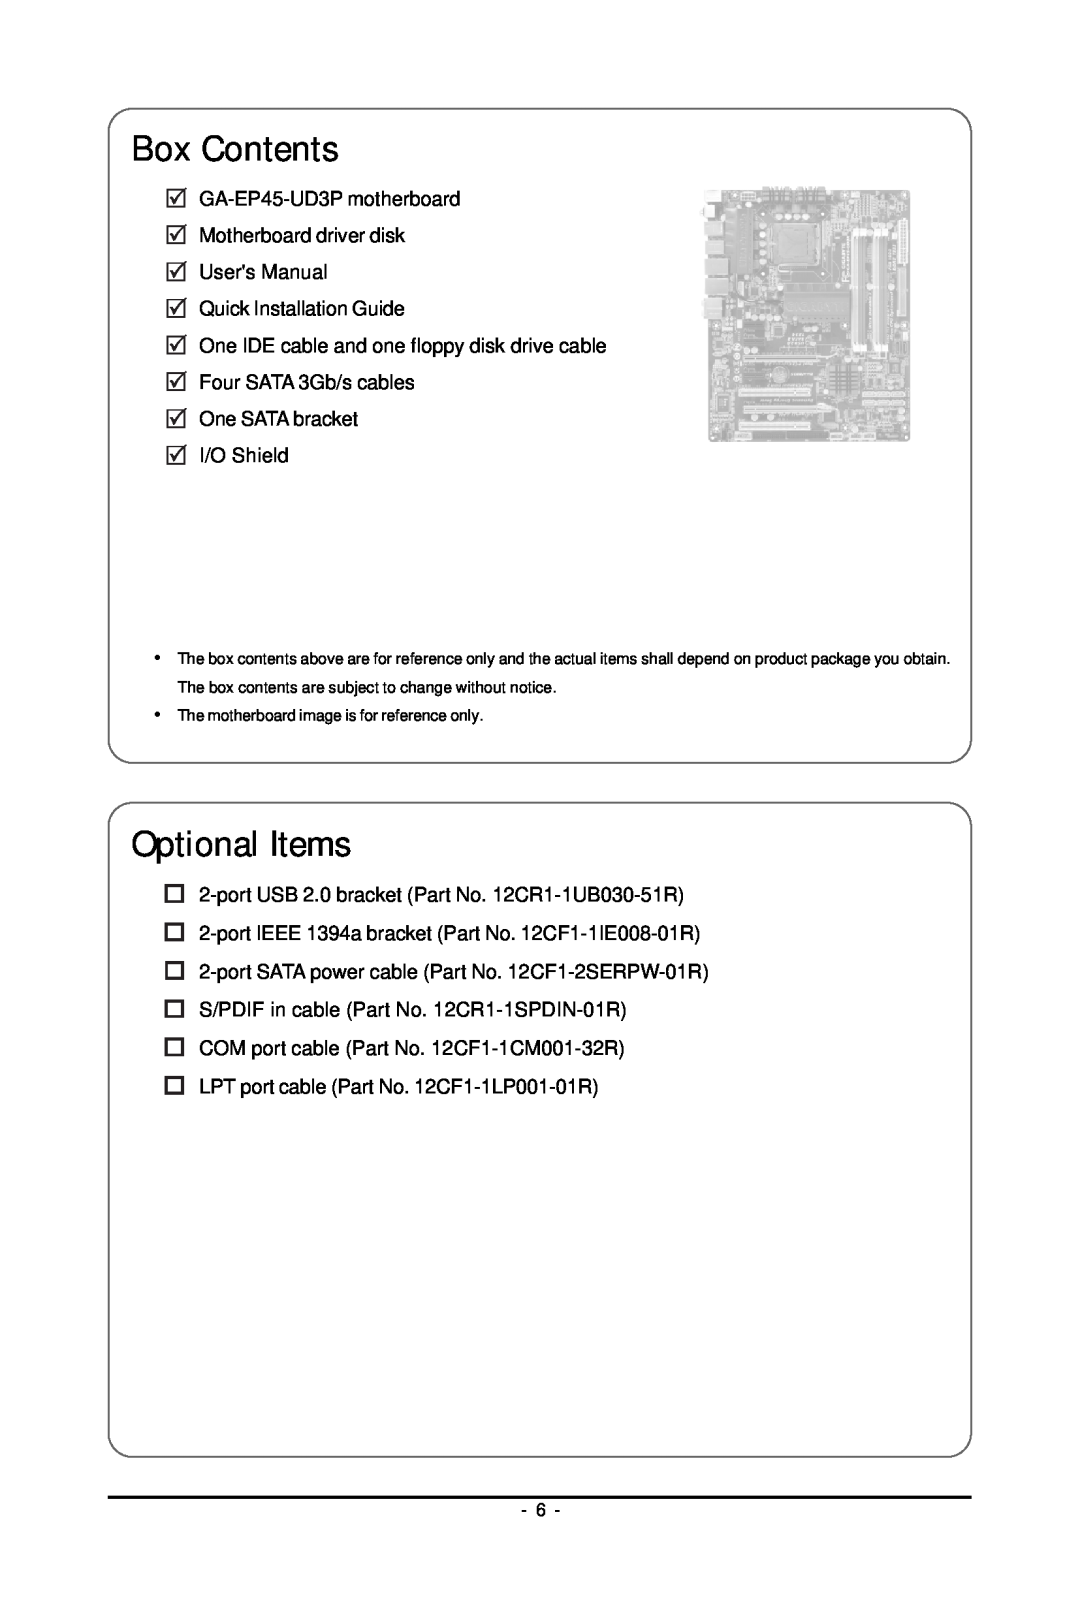 Gigabyte GA-EP45-UD3P user manual Box Contents, Optional Items 